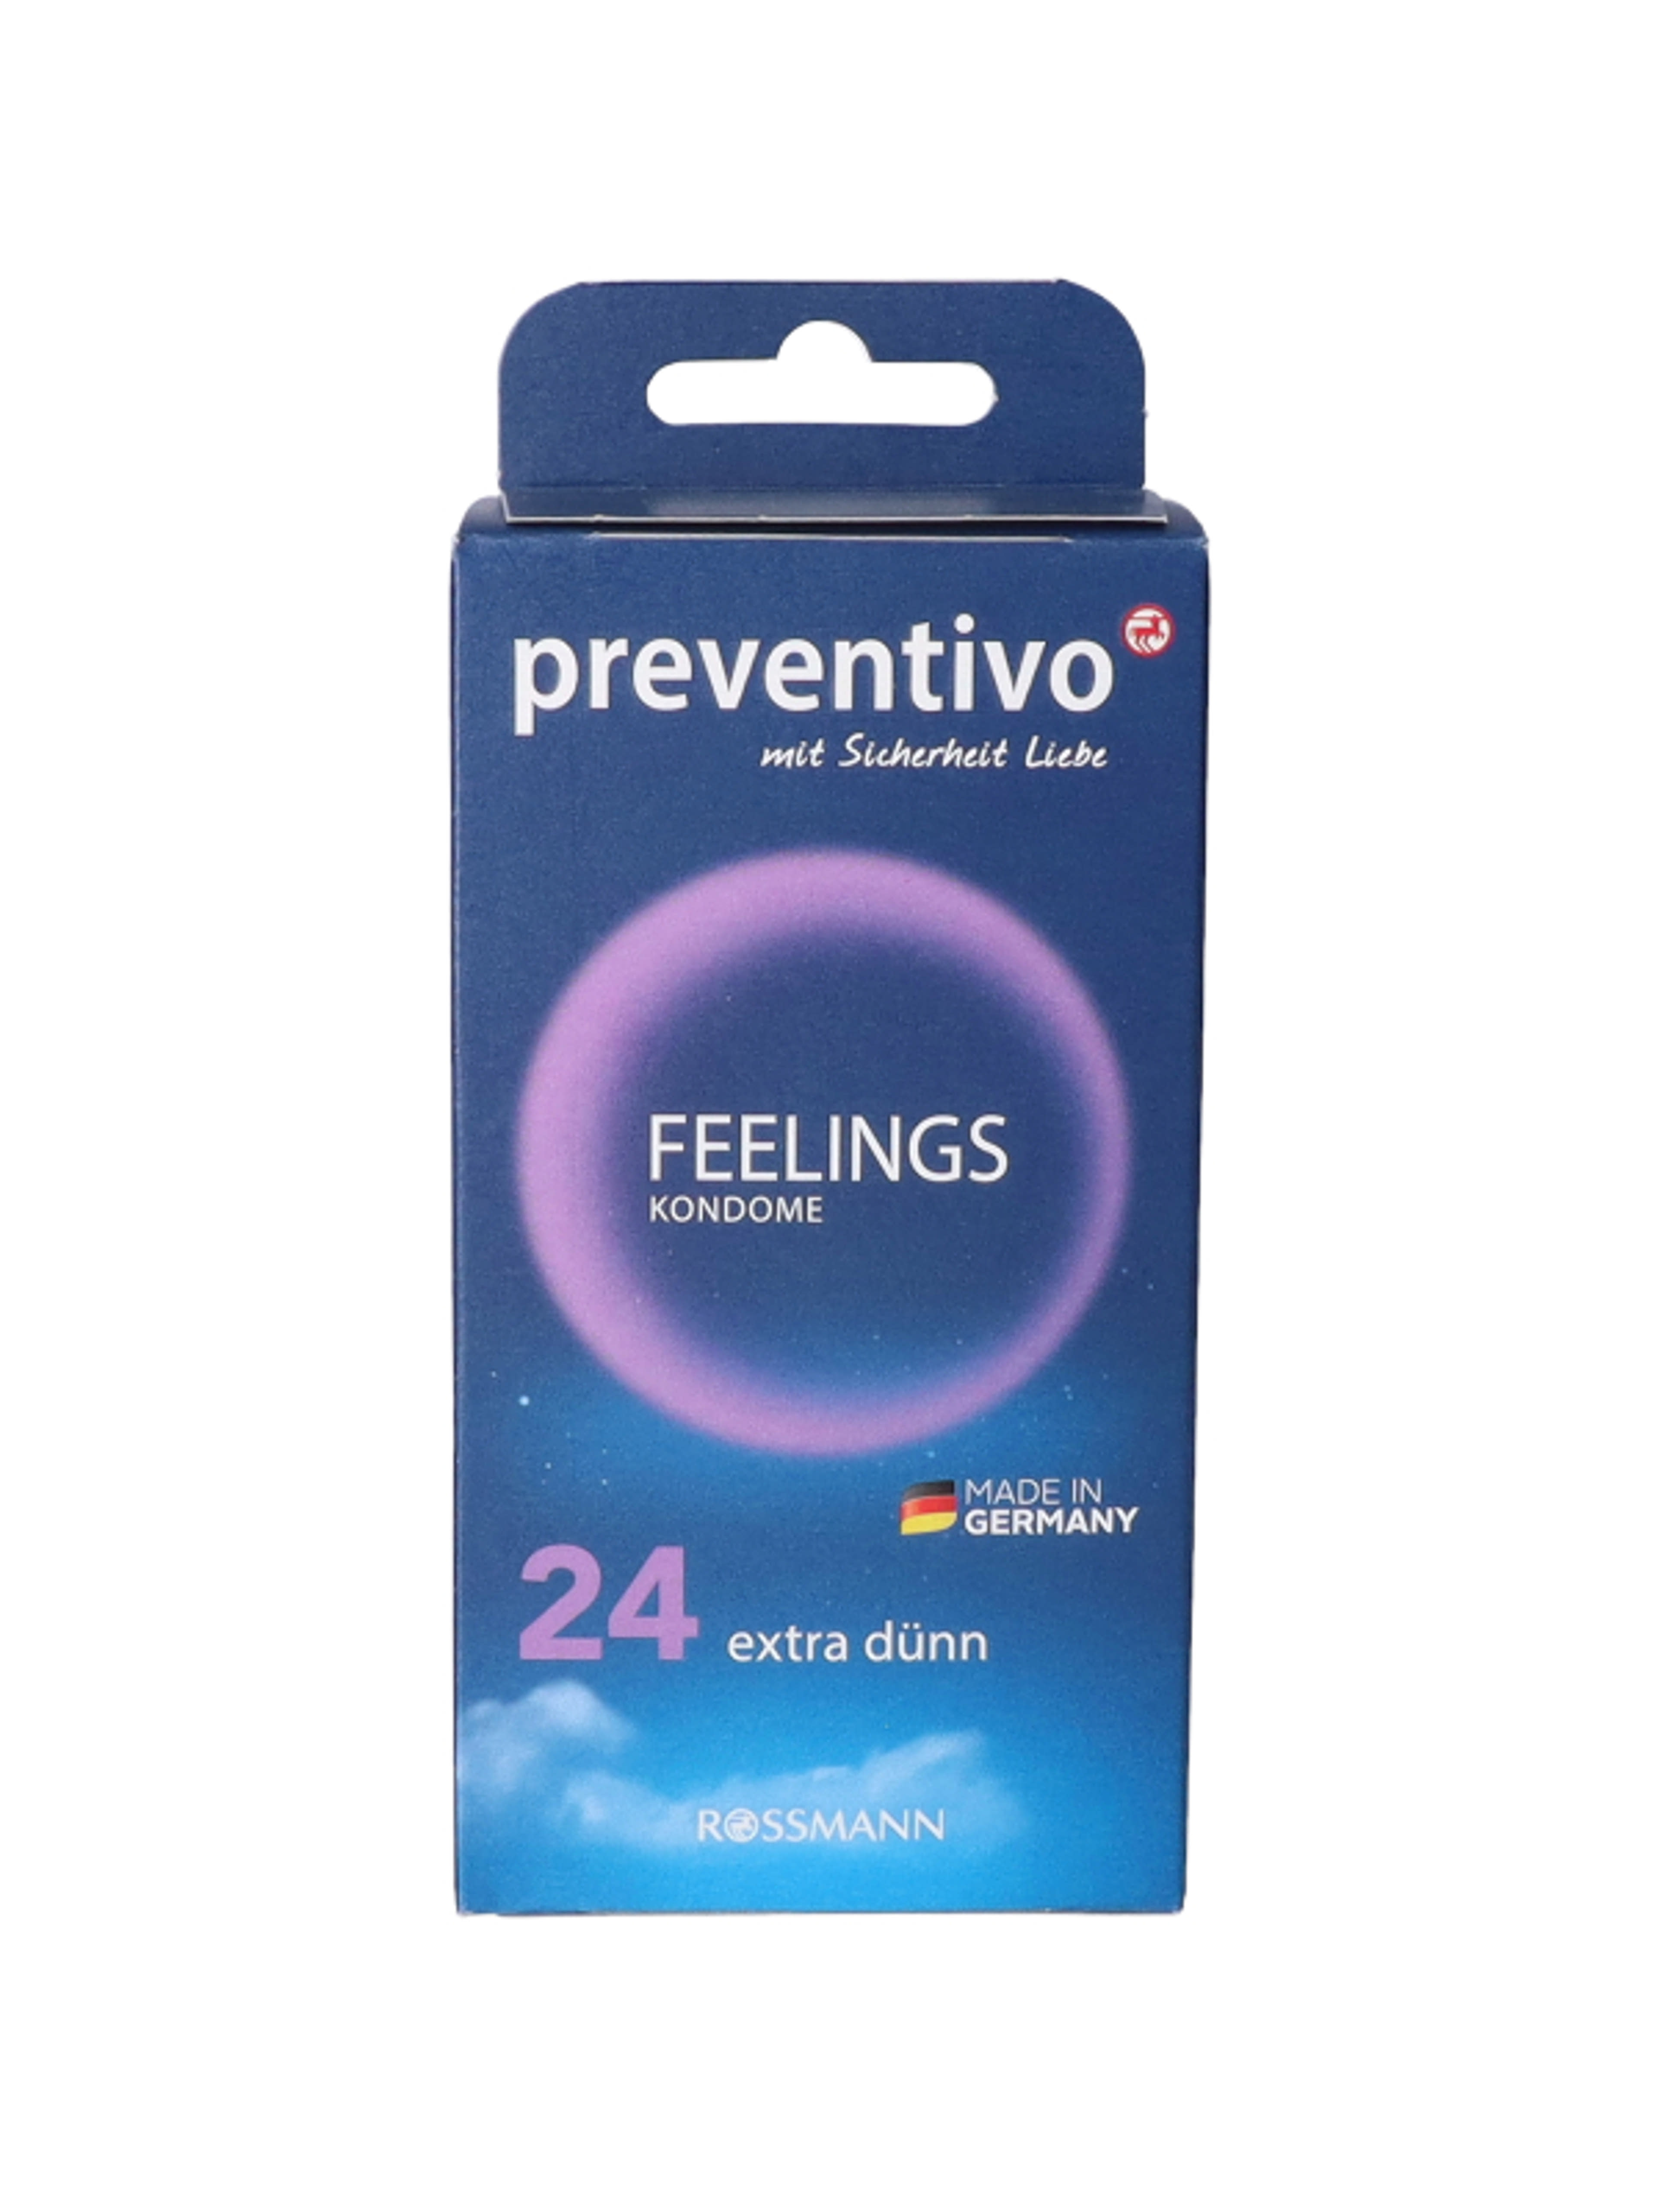 Preventivo ovszer feelings - 24 db